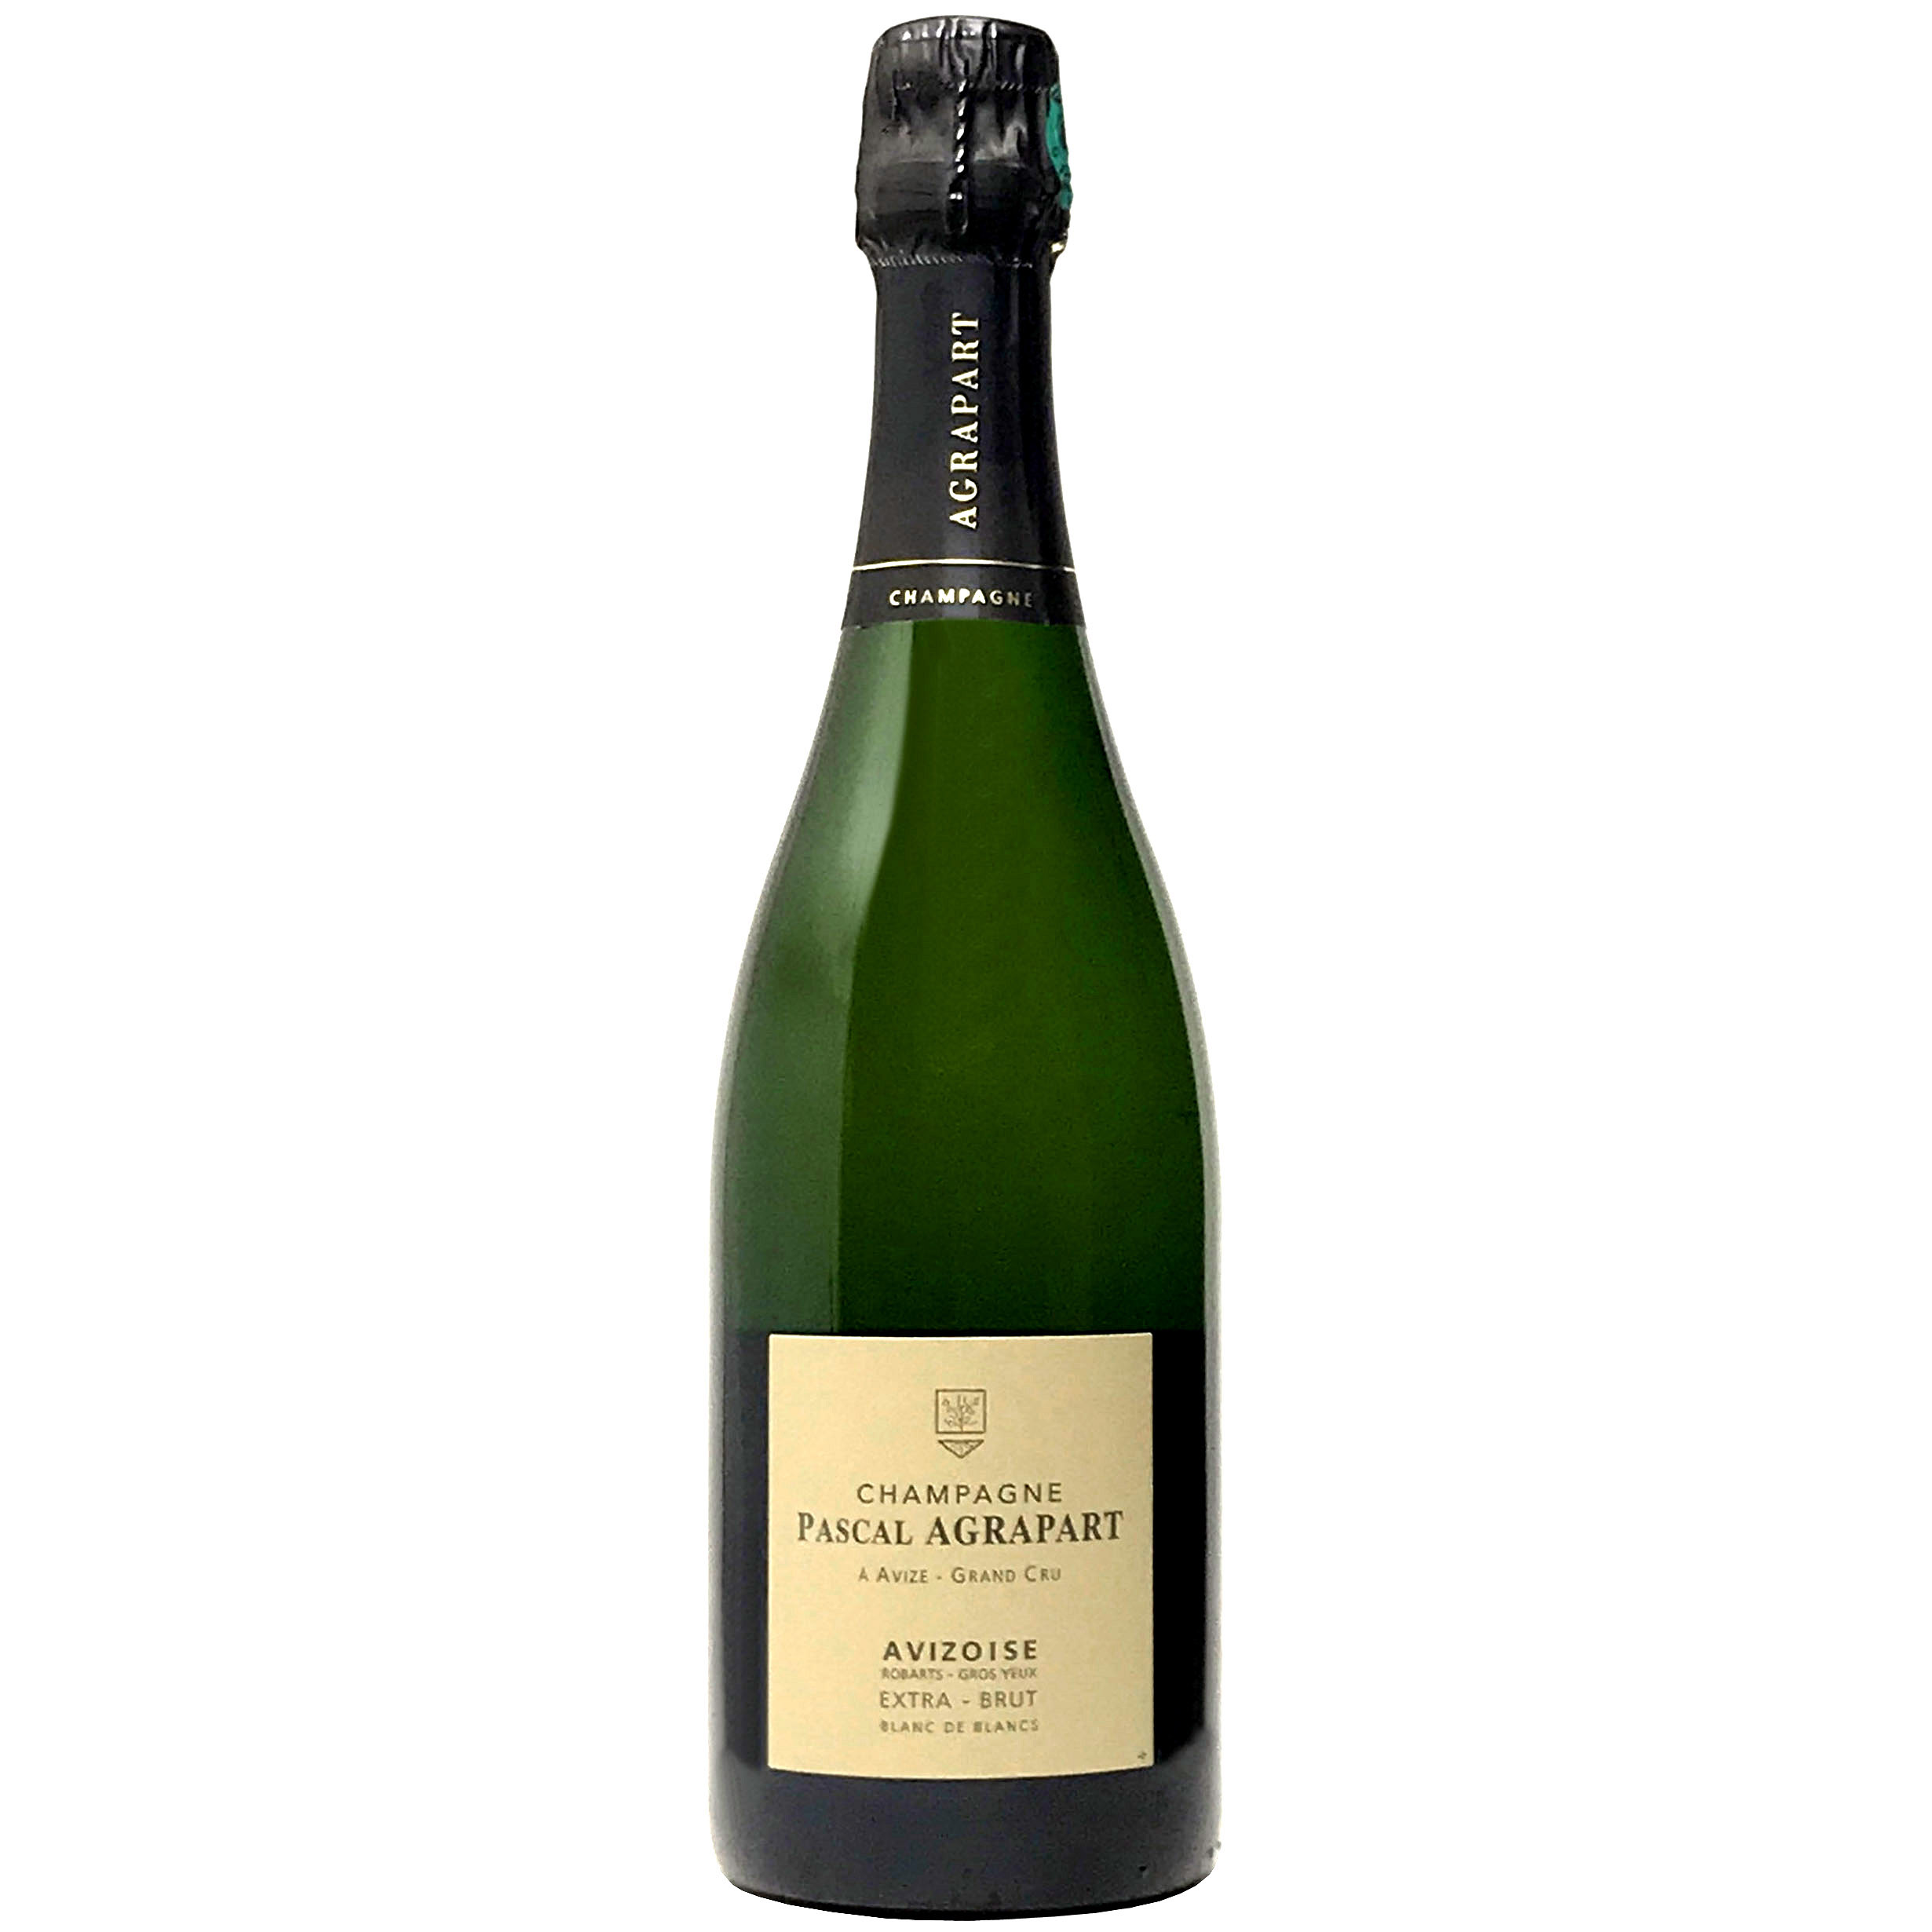 Champagne Agrapart Avizoise Extra Brut 2016